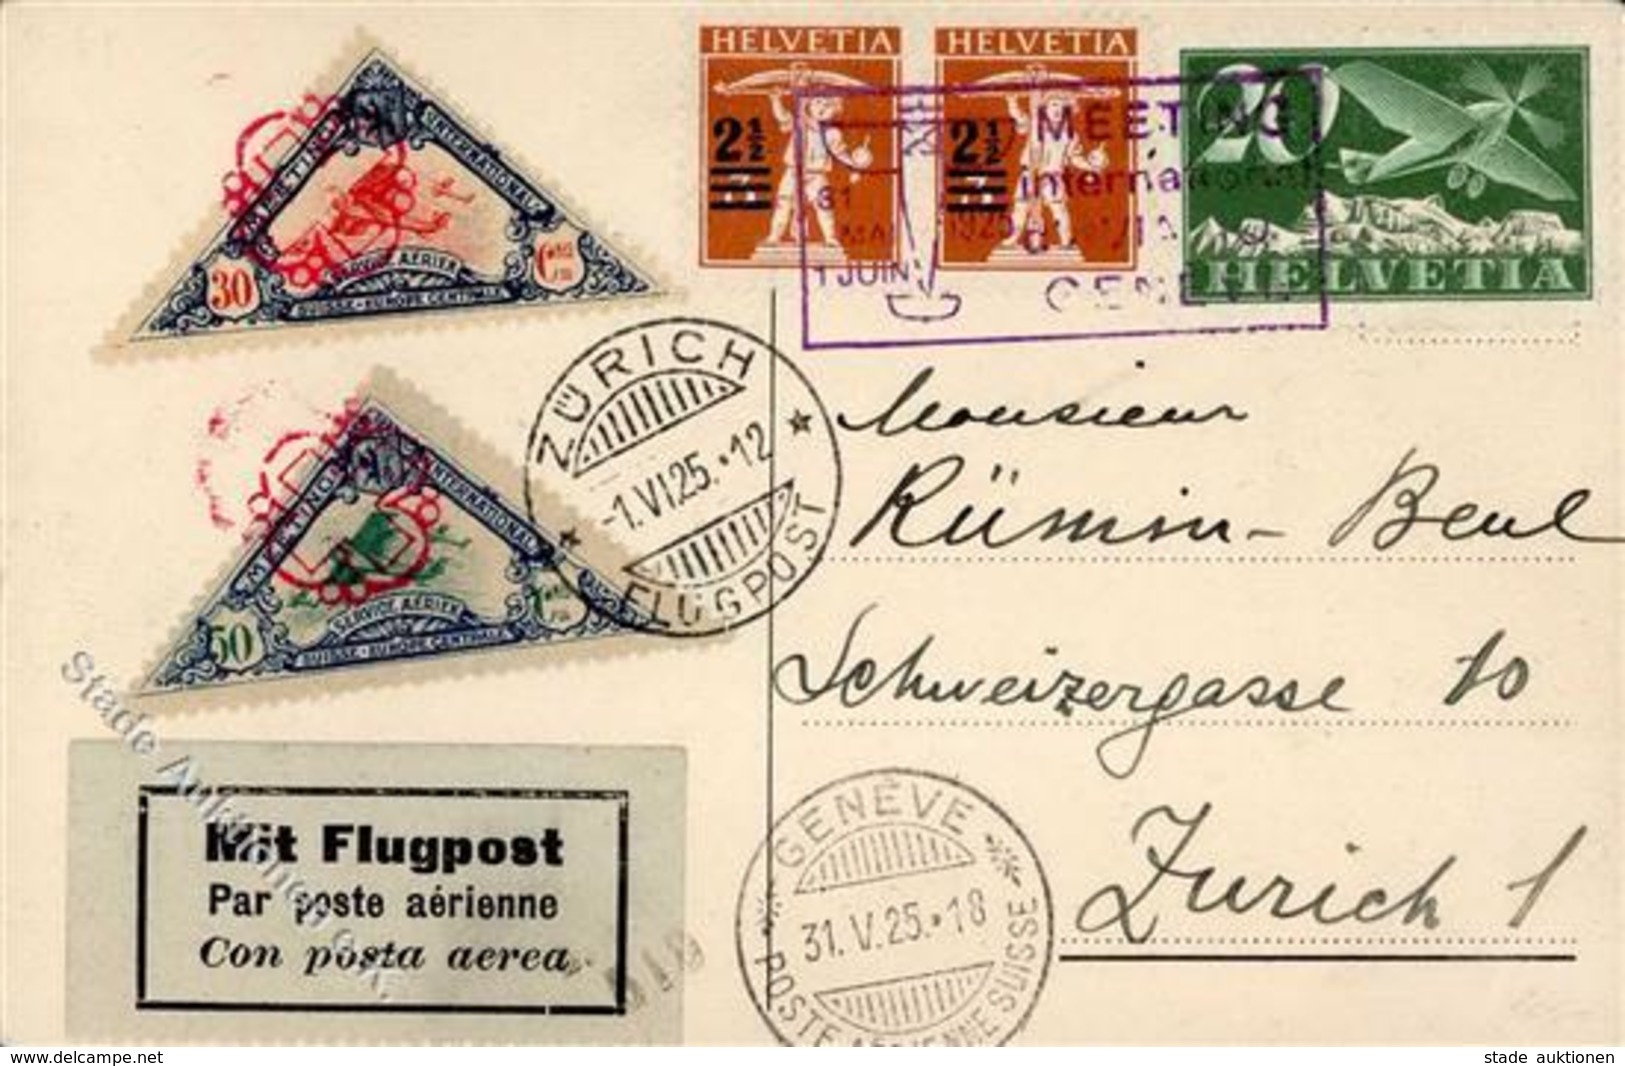 Flugpost CH, 1925, Lupo SF 25.4e(h-i), Internationales Flugmeeting Genf, Mit Vignetten 30 + 50 C Suisse-Europa, Offiz. K - Airmen, Fliers